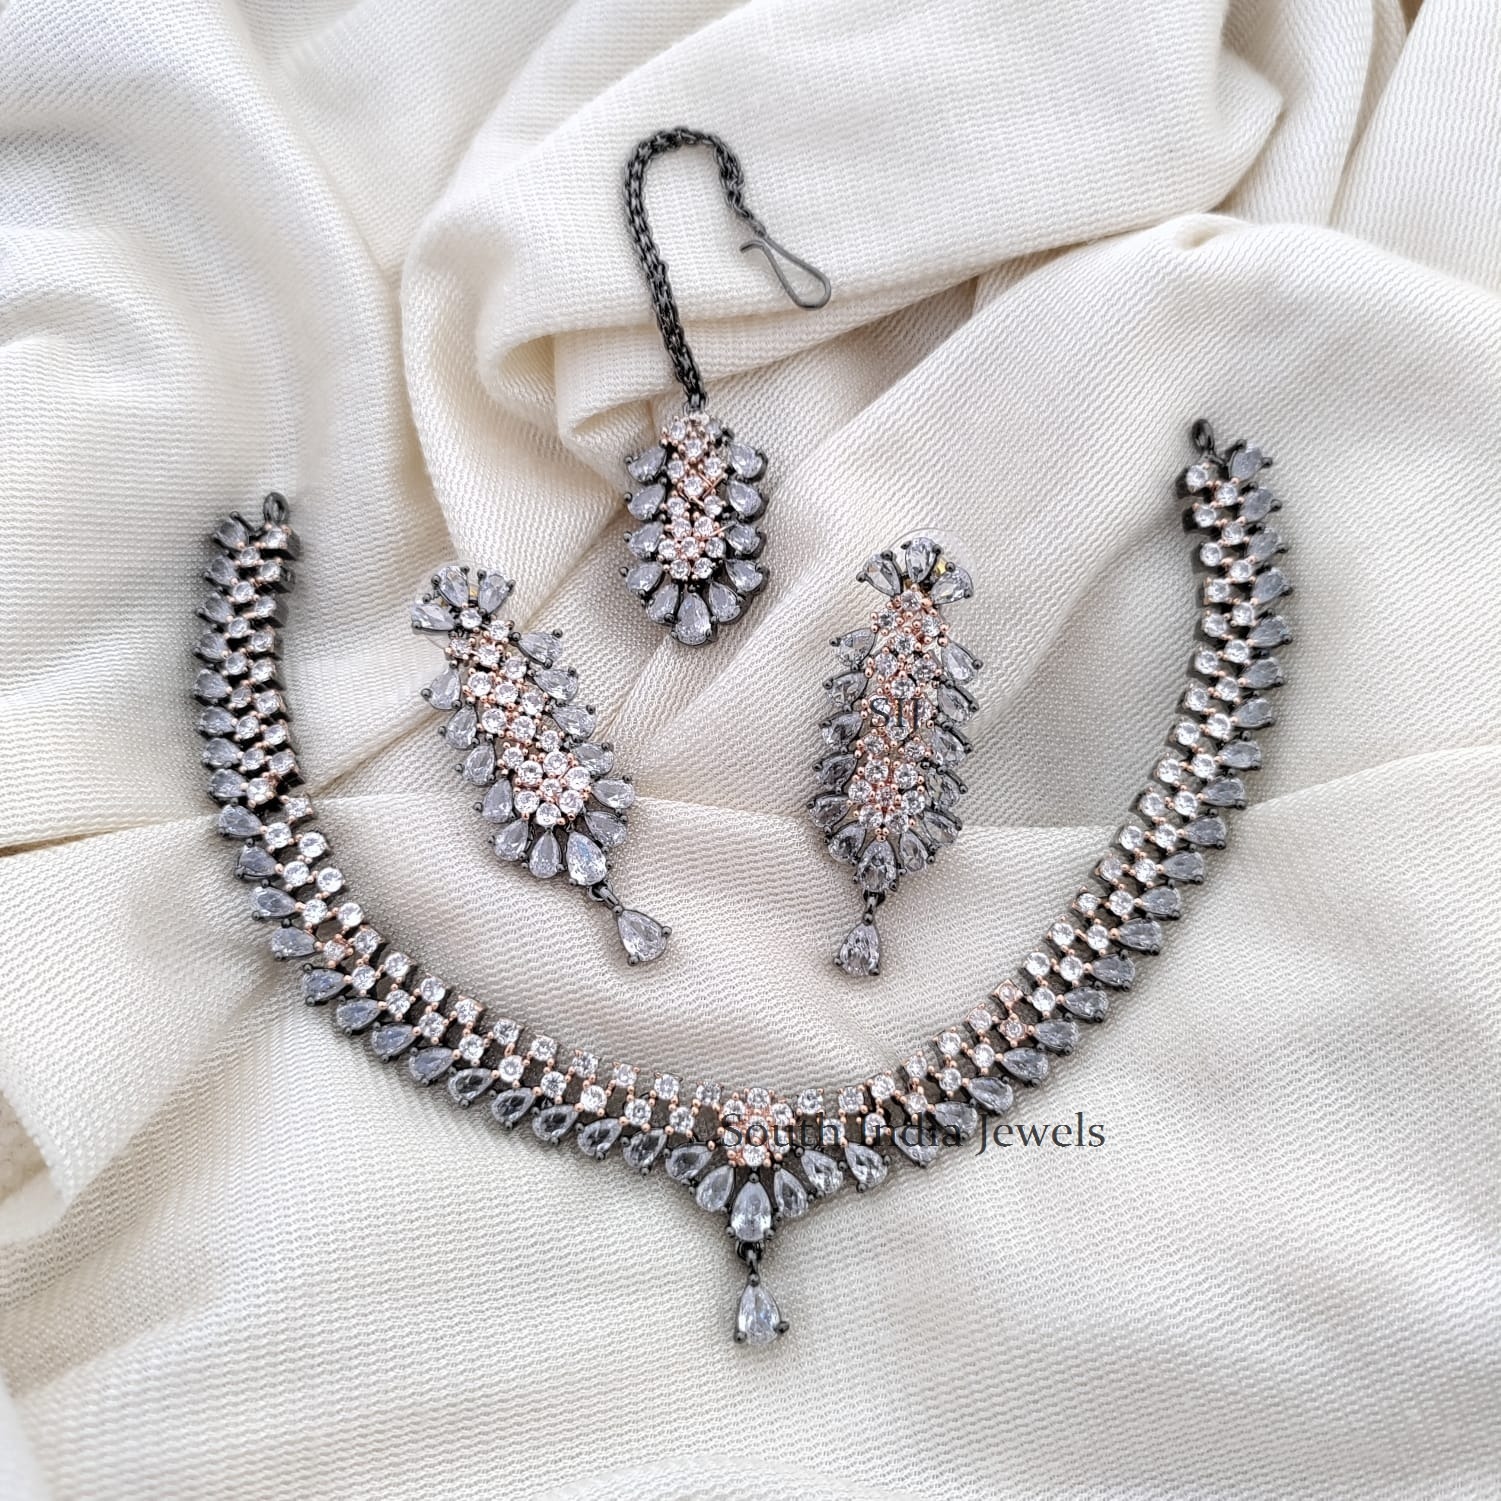 Stunning Necklace And Mang Tikka